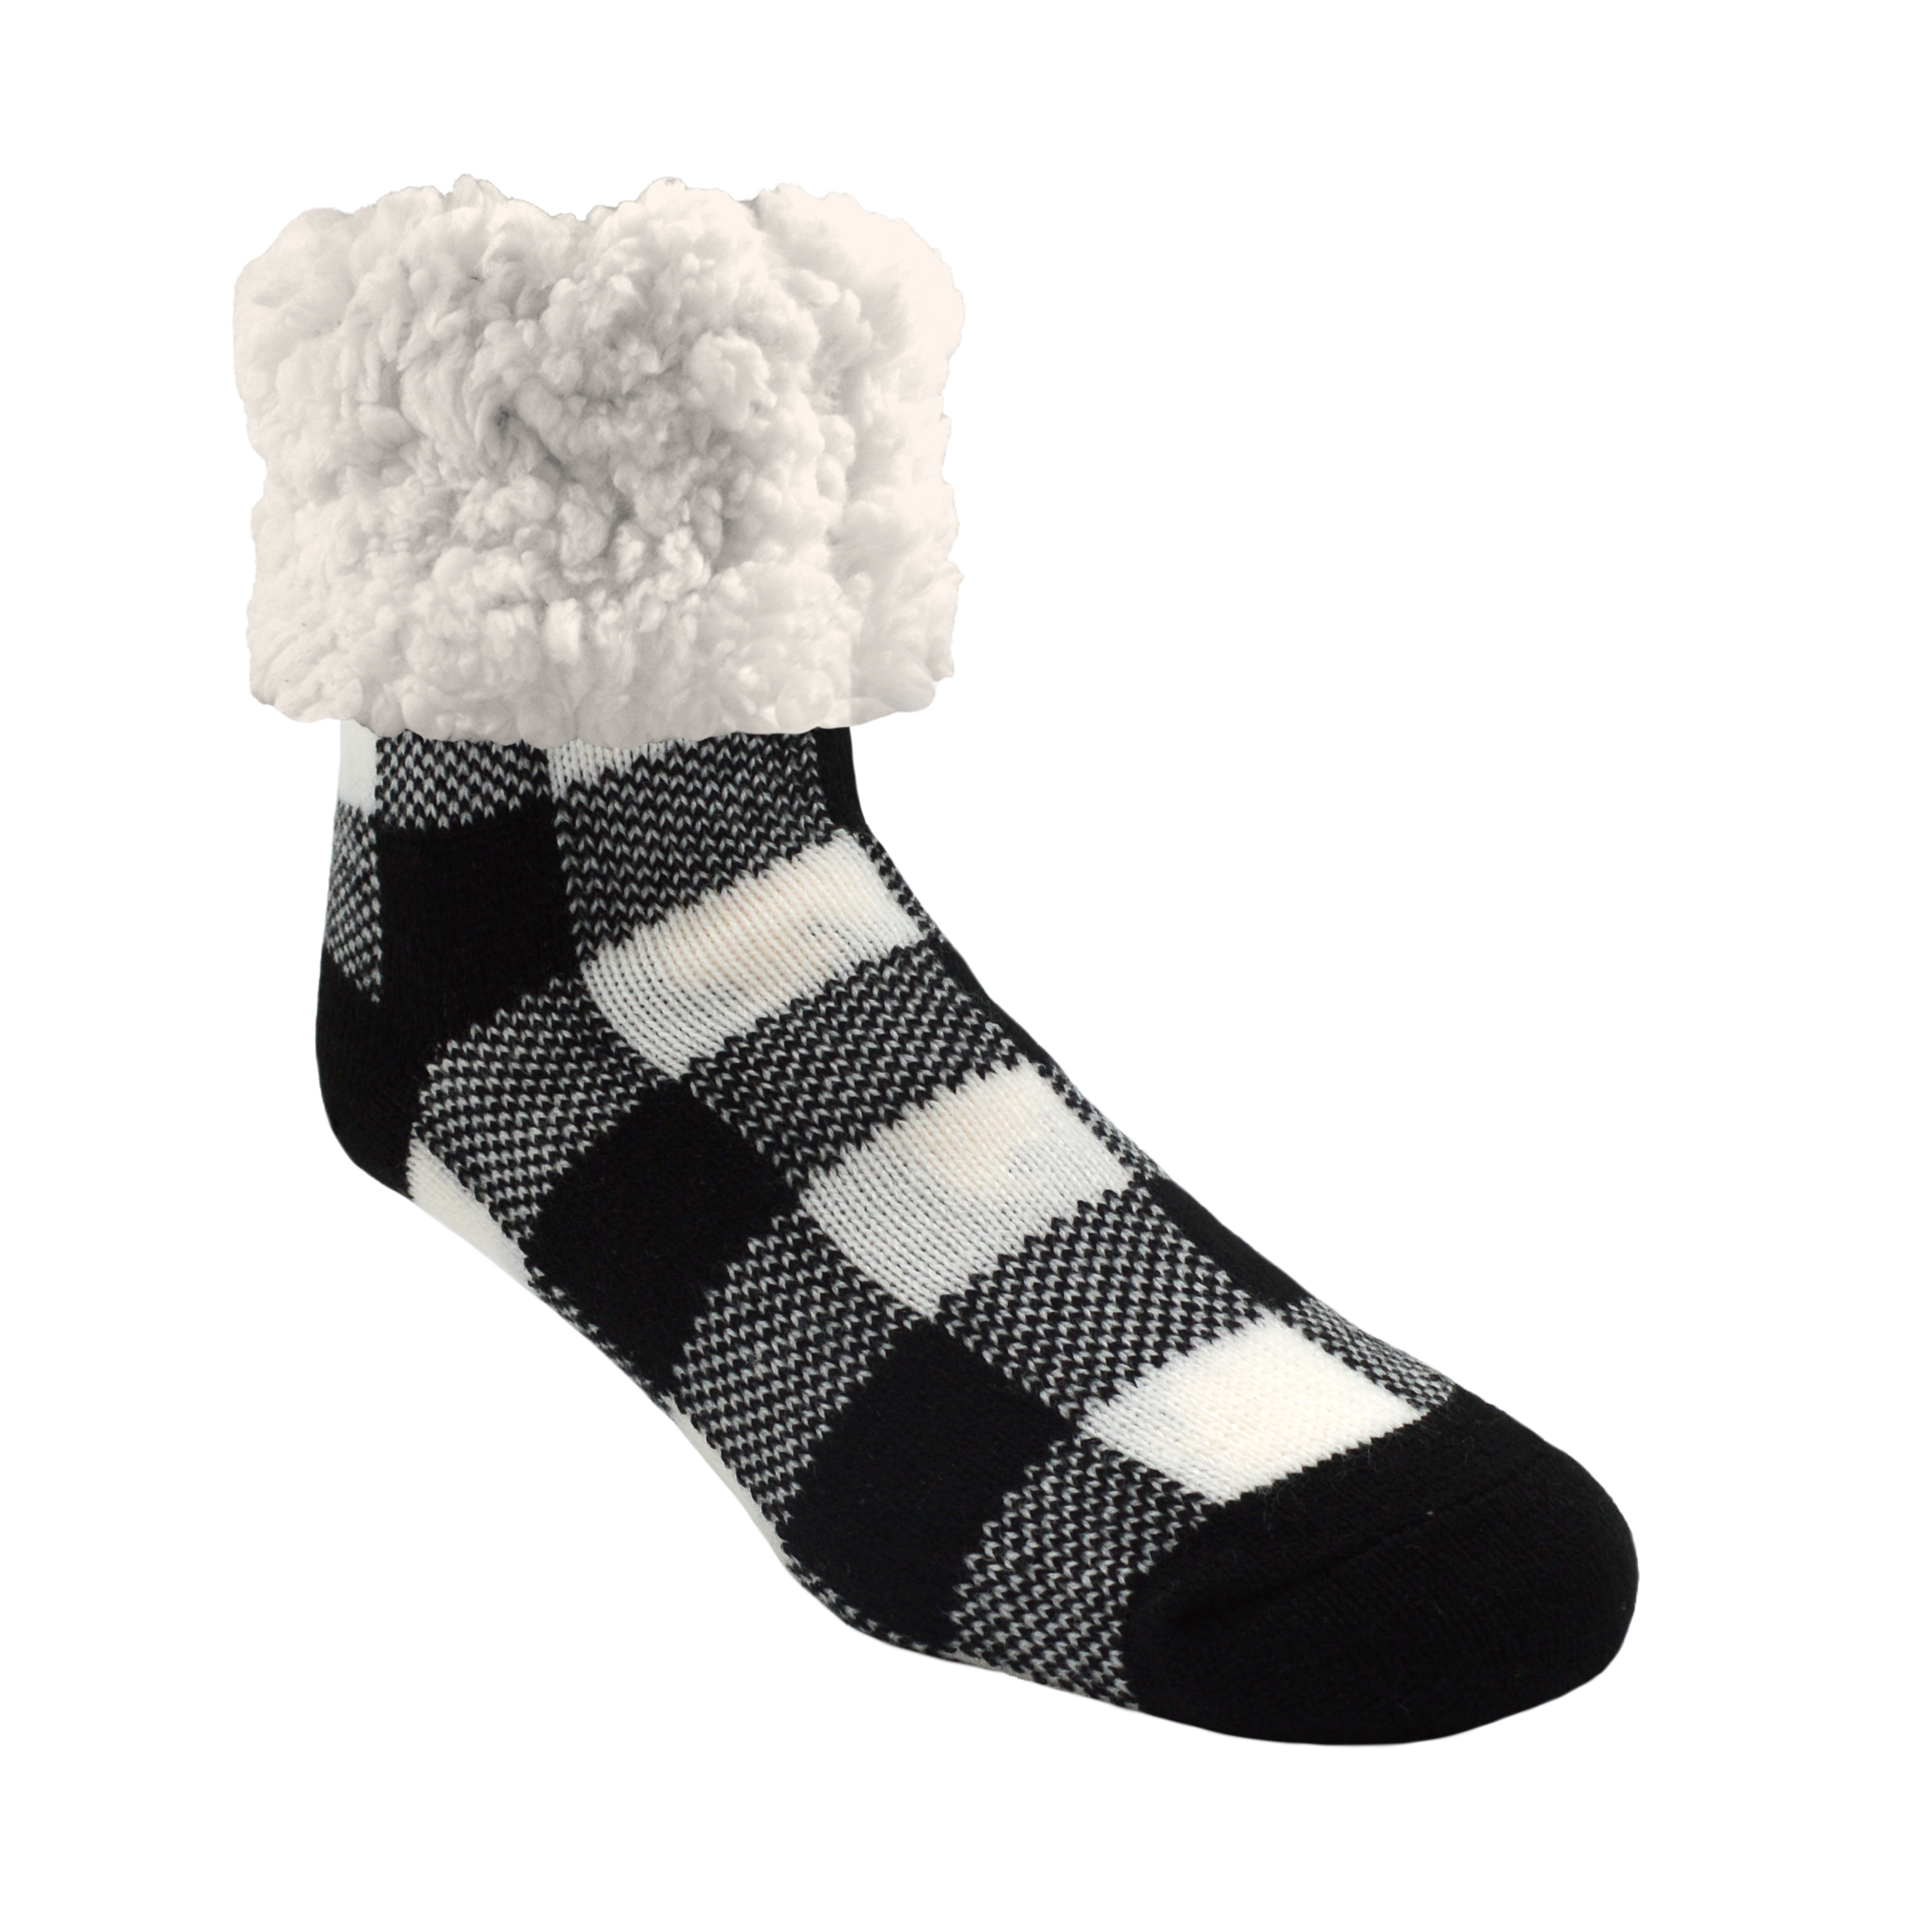 White Lumberjack - Large Size Pudus Slipper Socks    